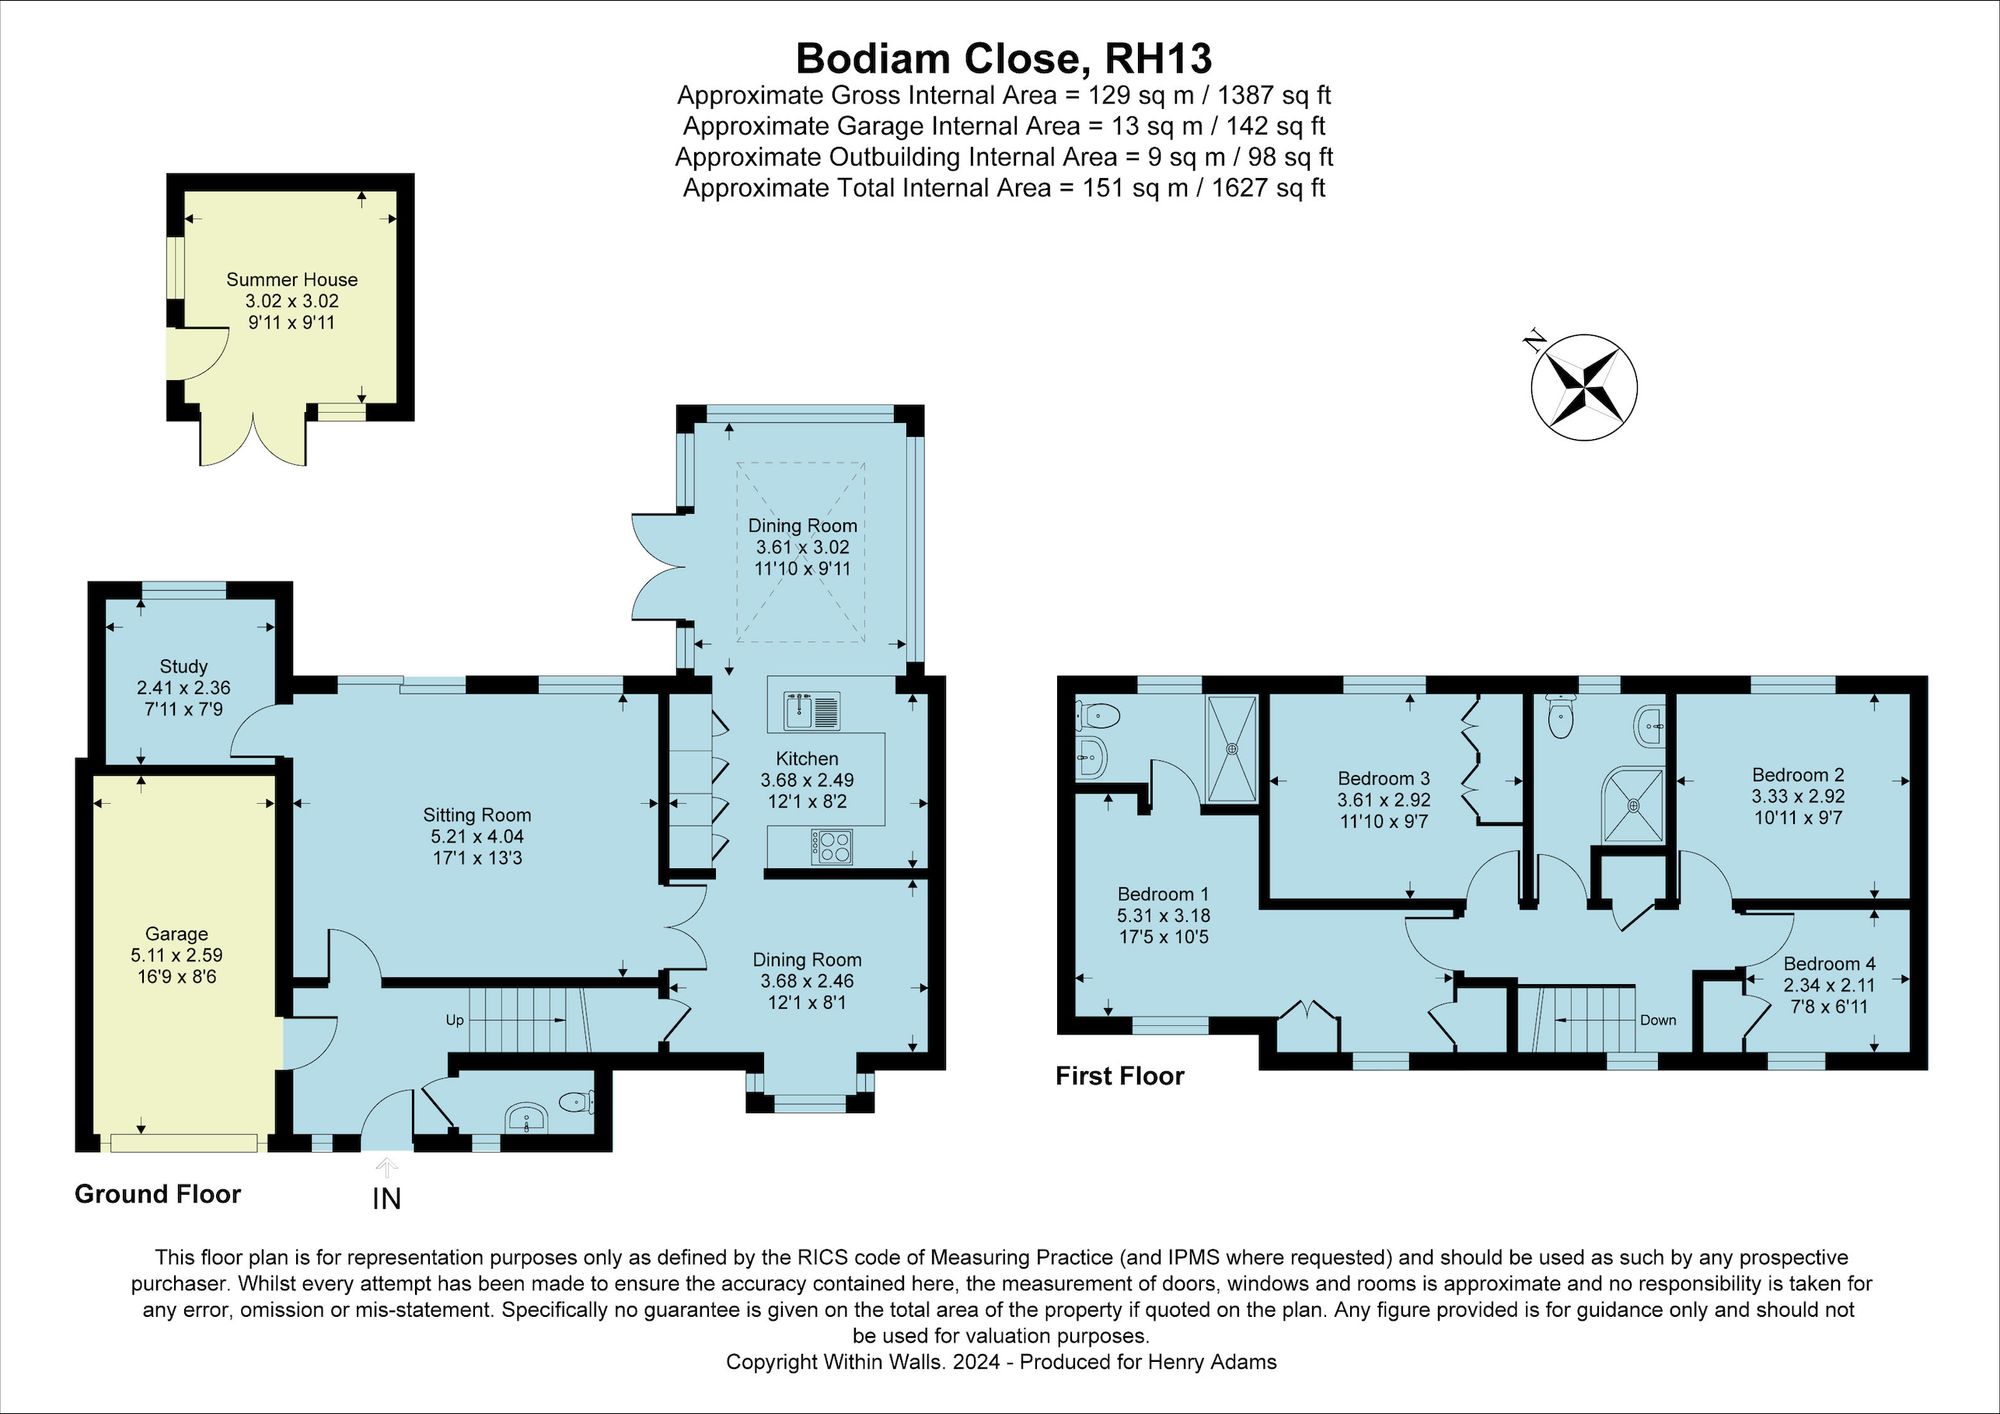 Bodiam Close, Southwater, RH13 floorplans